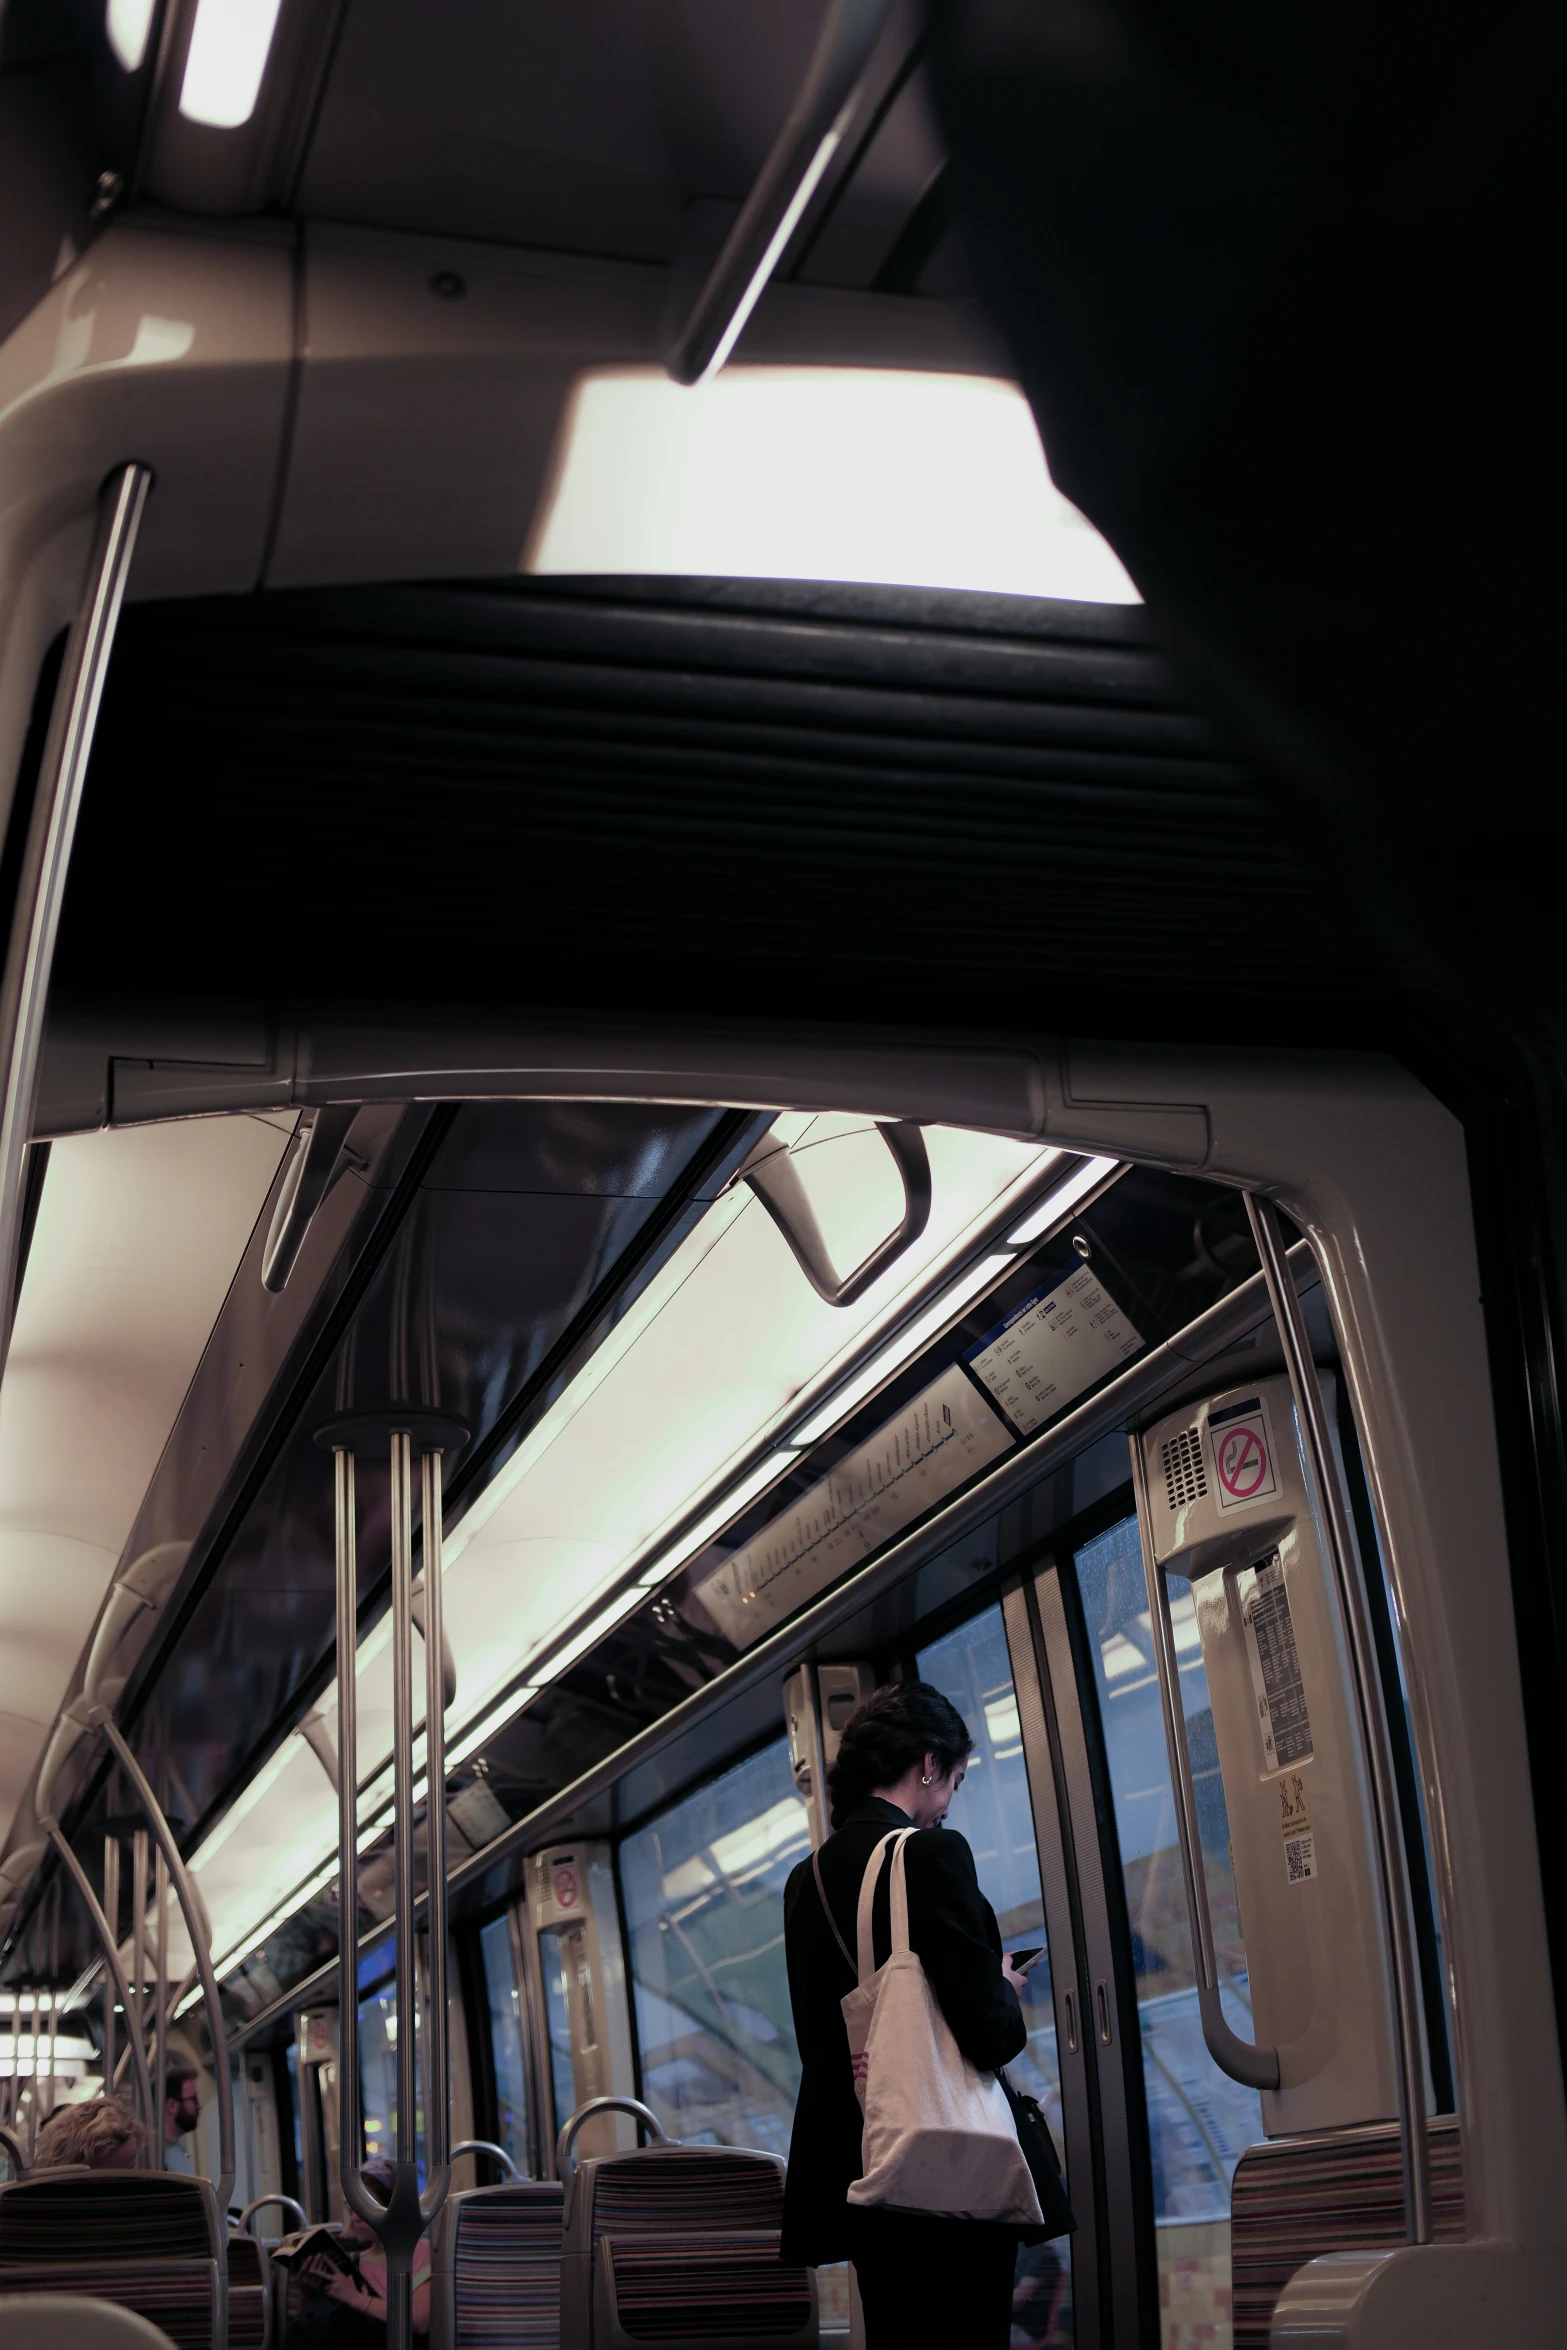 a woman wearing black is standing inside of a train